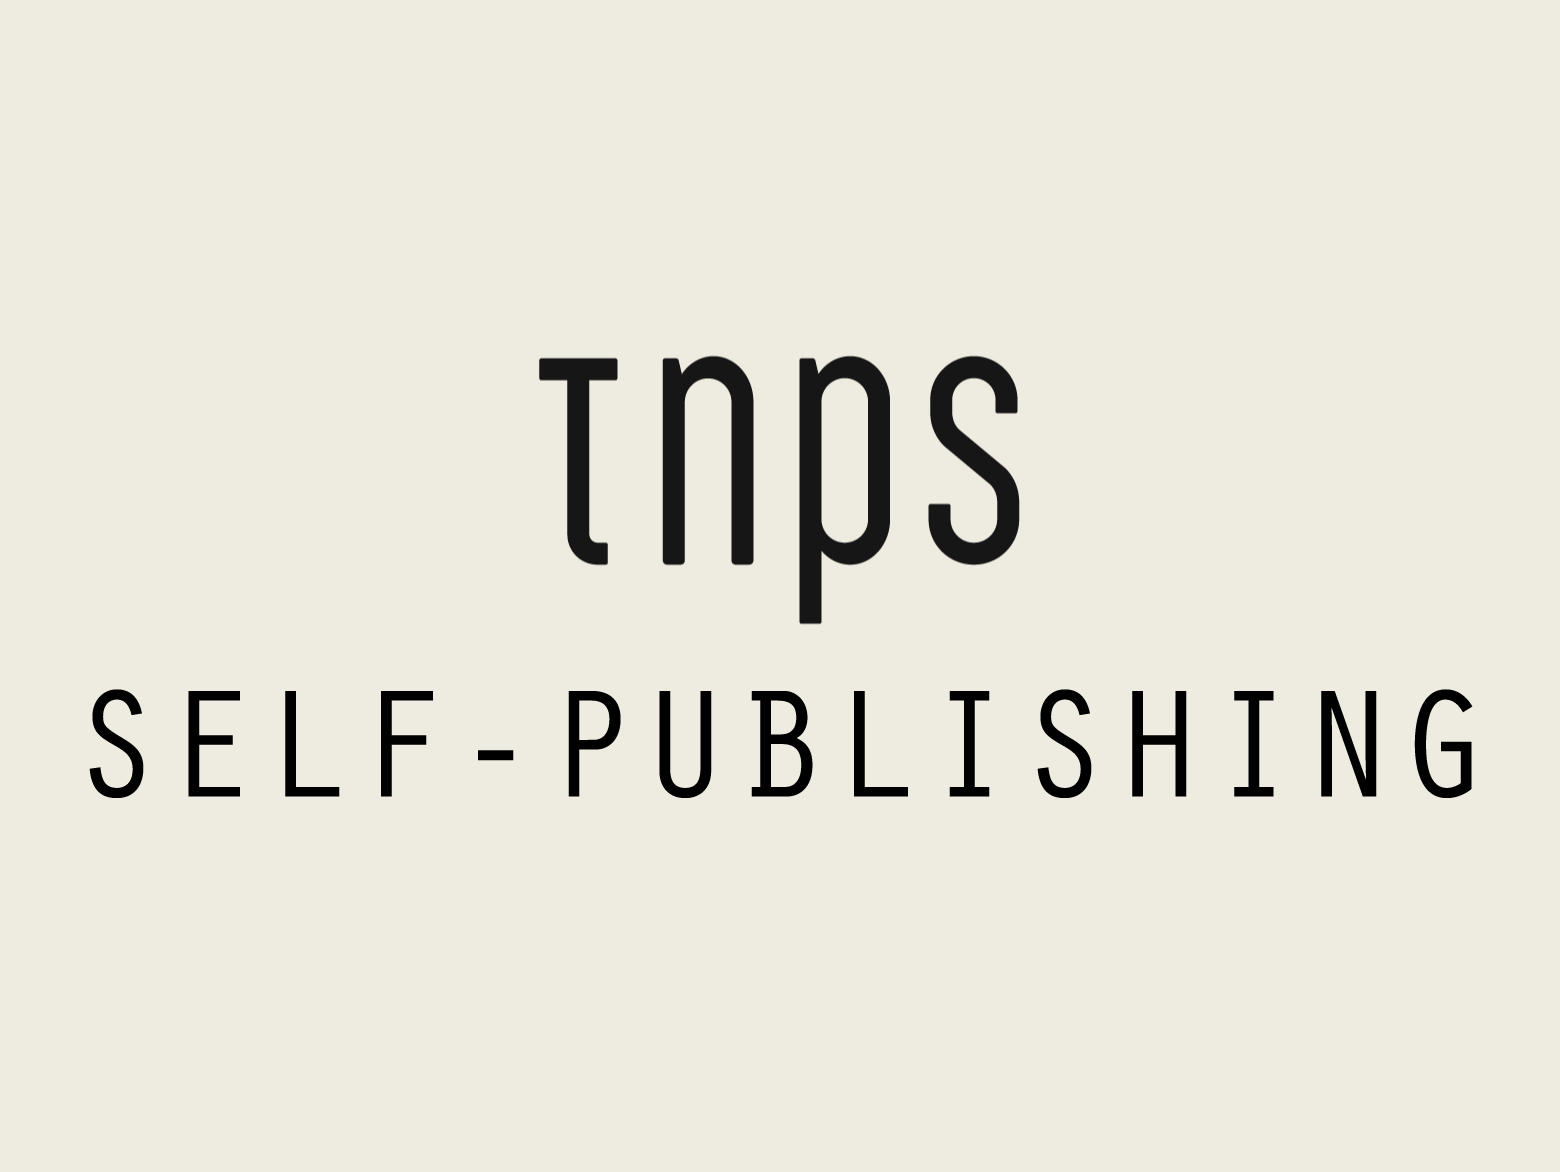 Barnes & Noble removes manuscript editor from NookPress